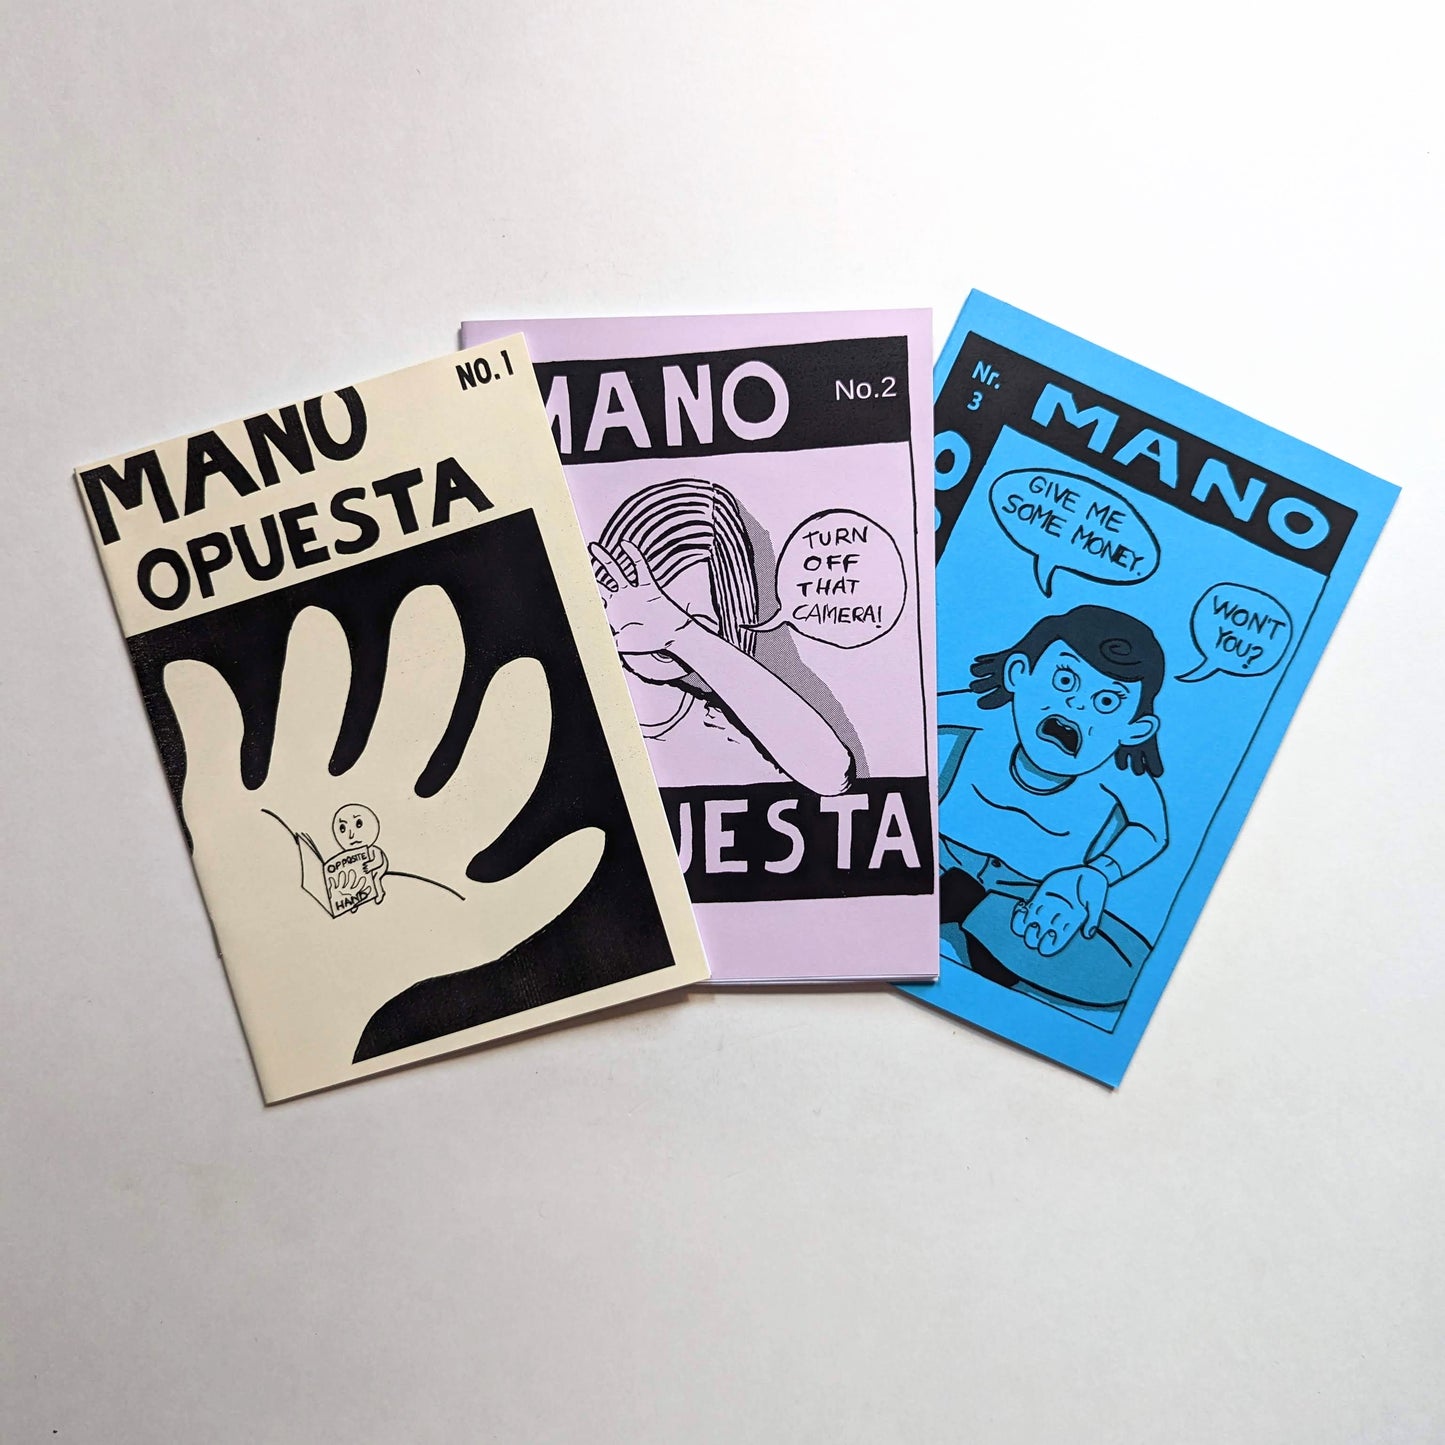 Mano Opuesta No. 1 by Ana Pando